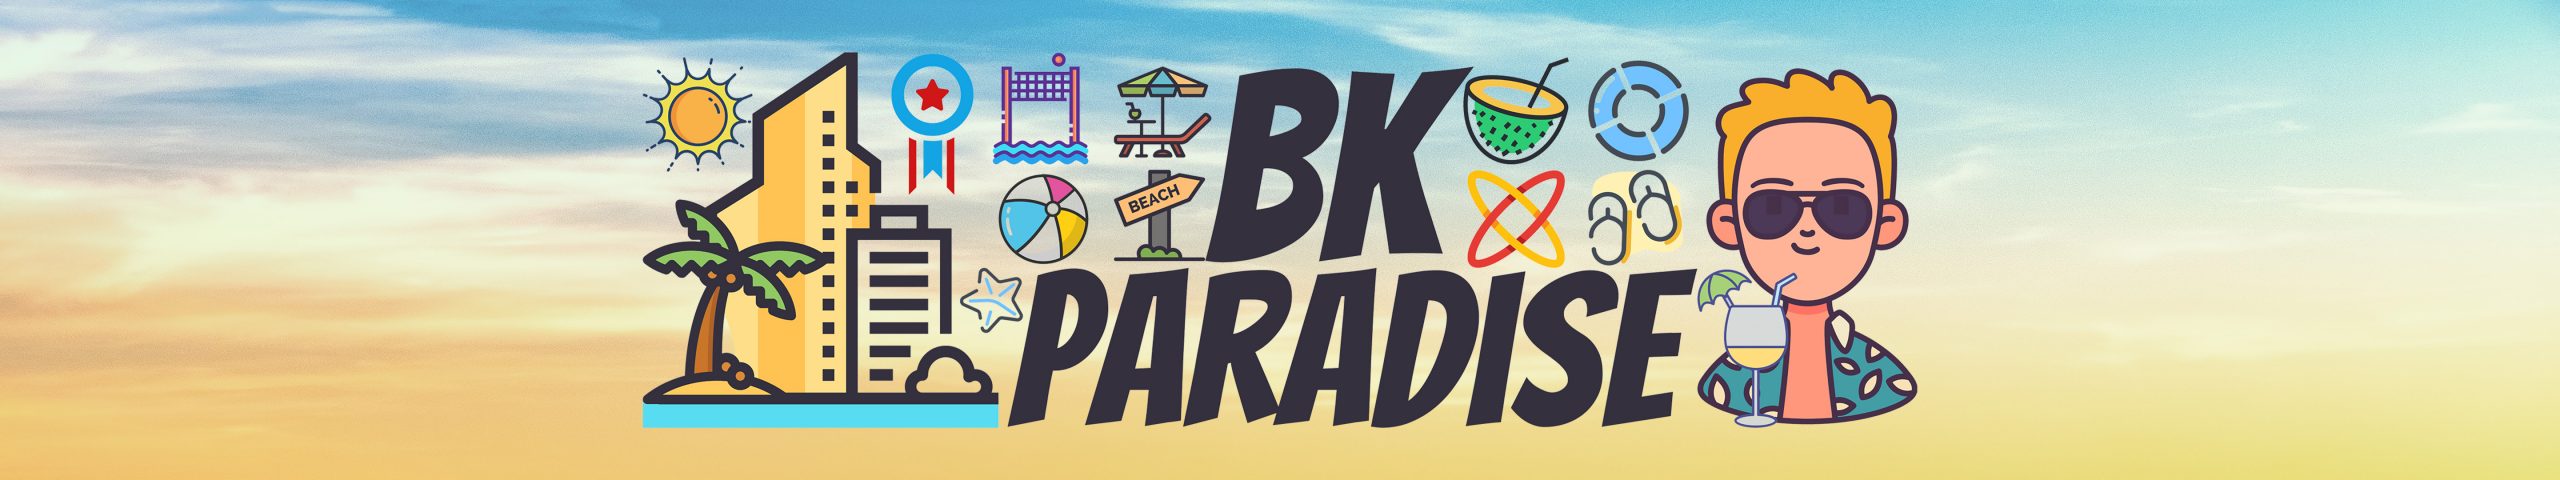 bk paradise wallpaper